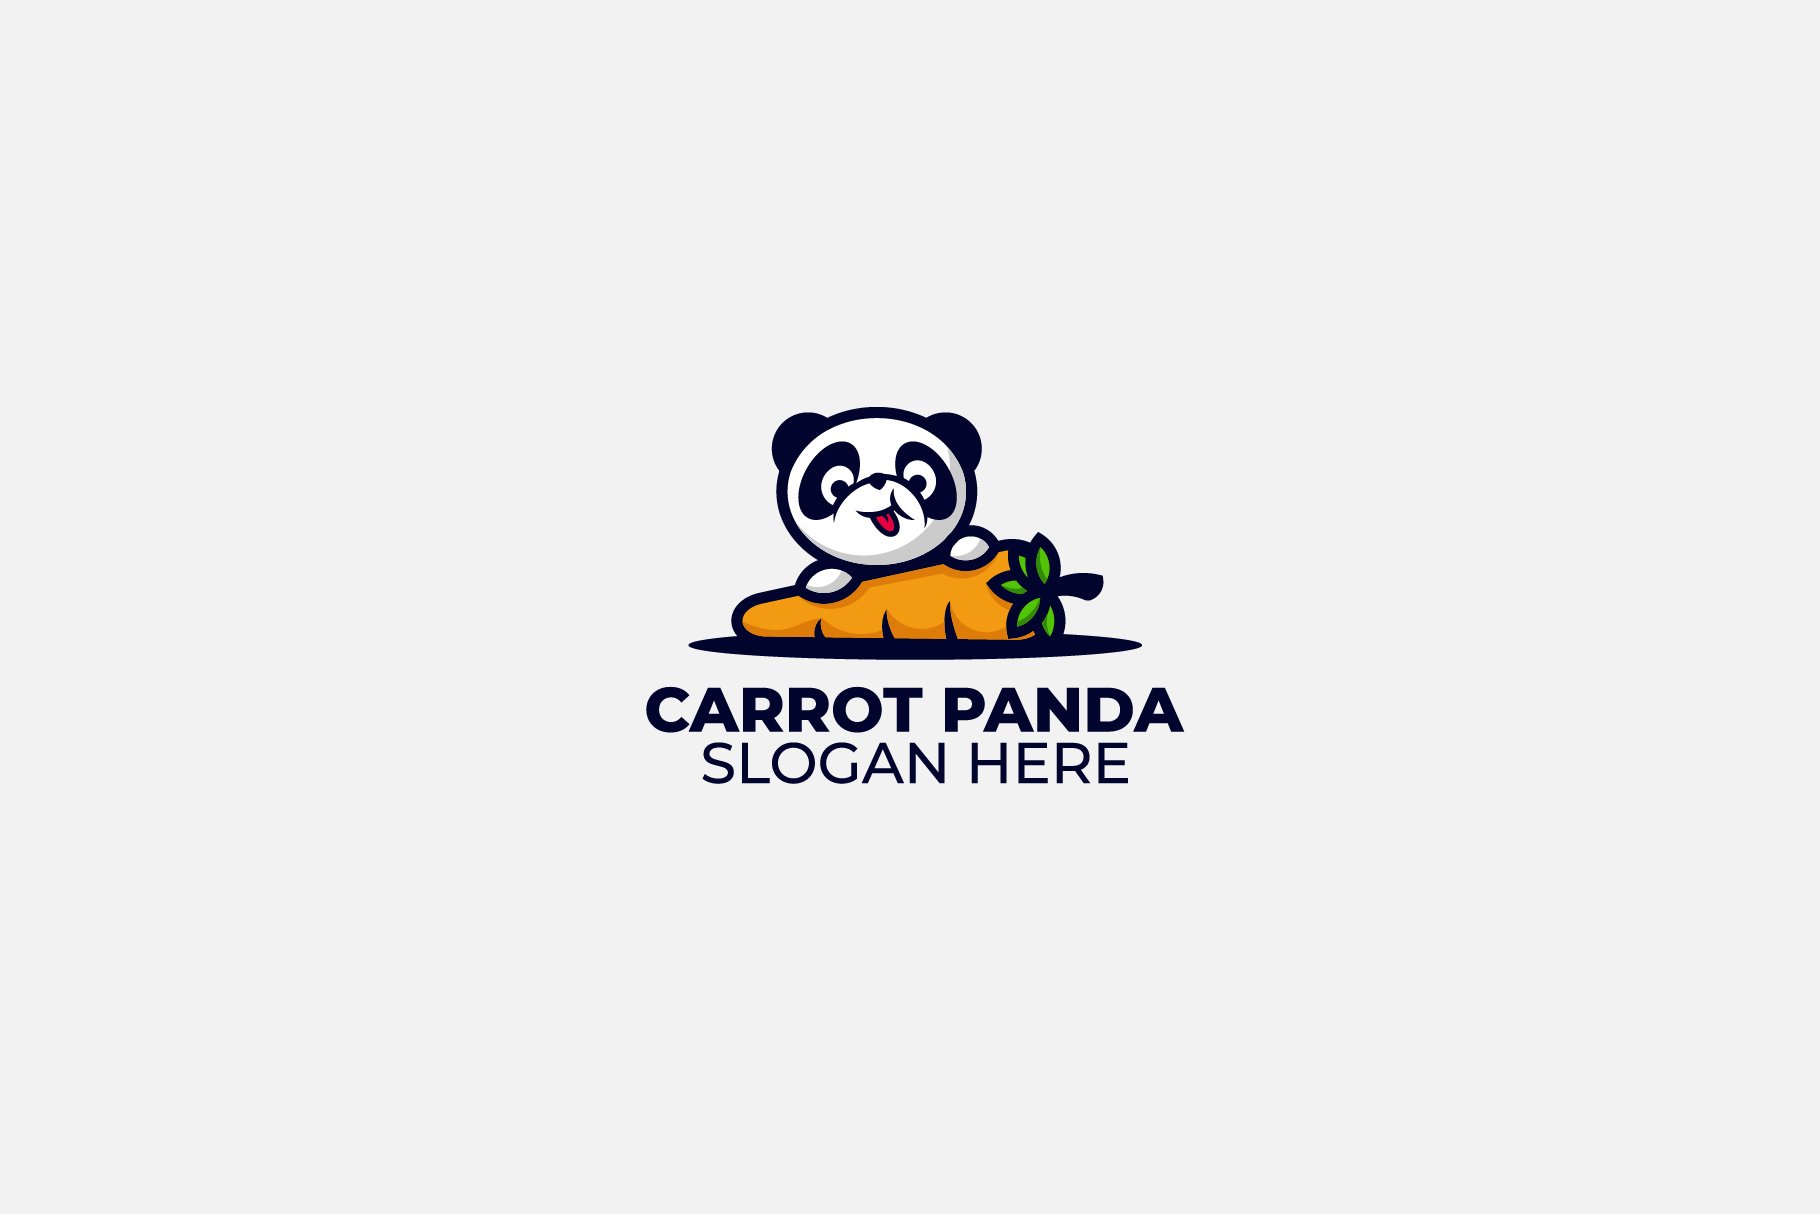 carrot with panda design logo illust cover image.